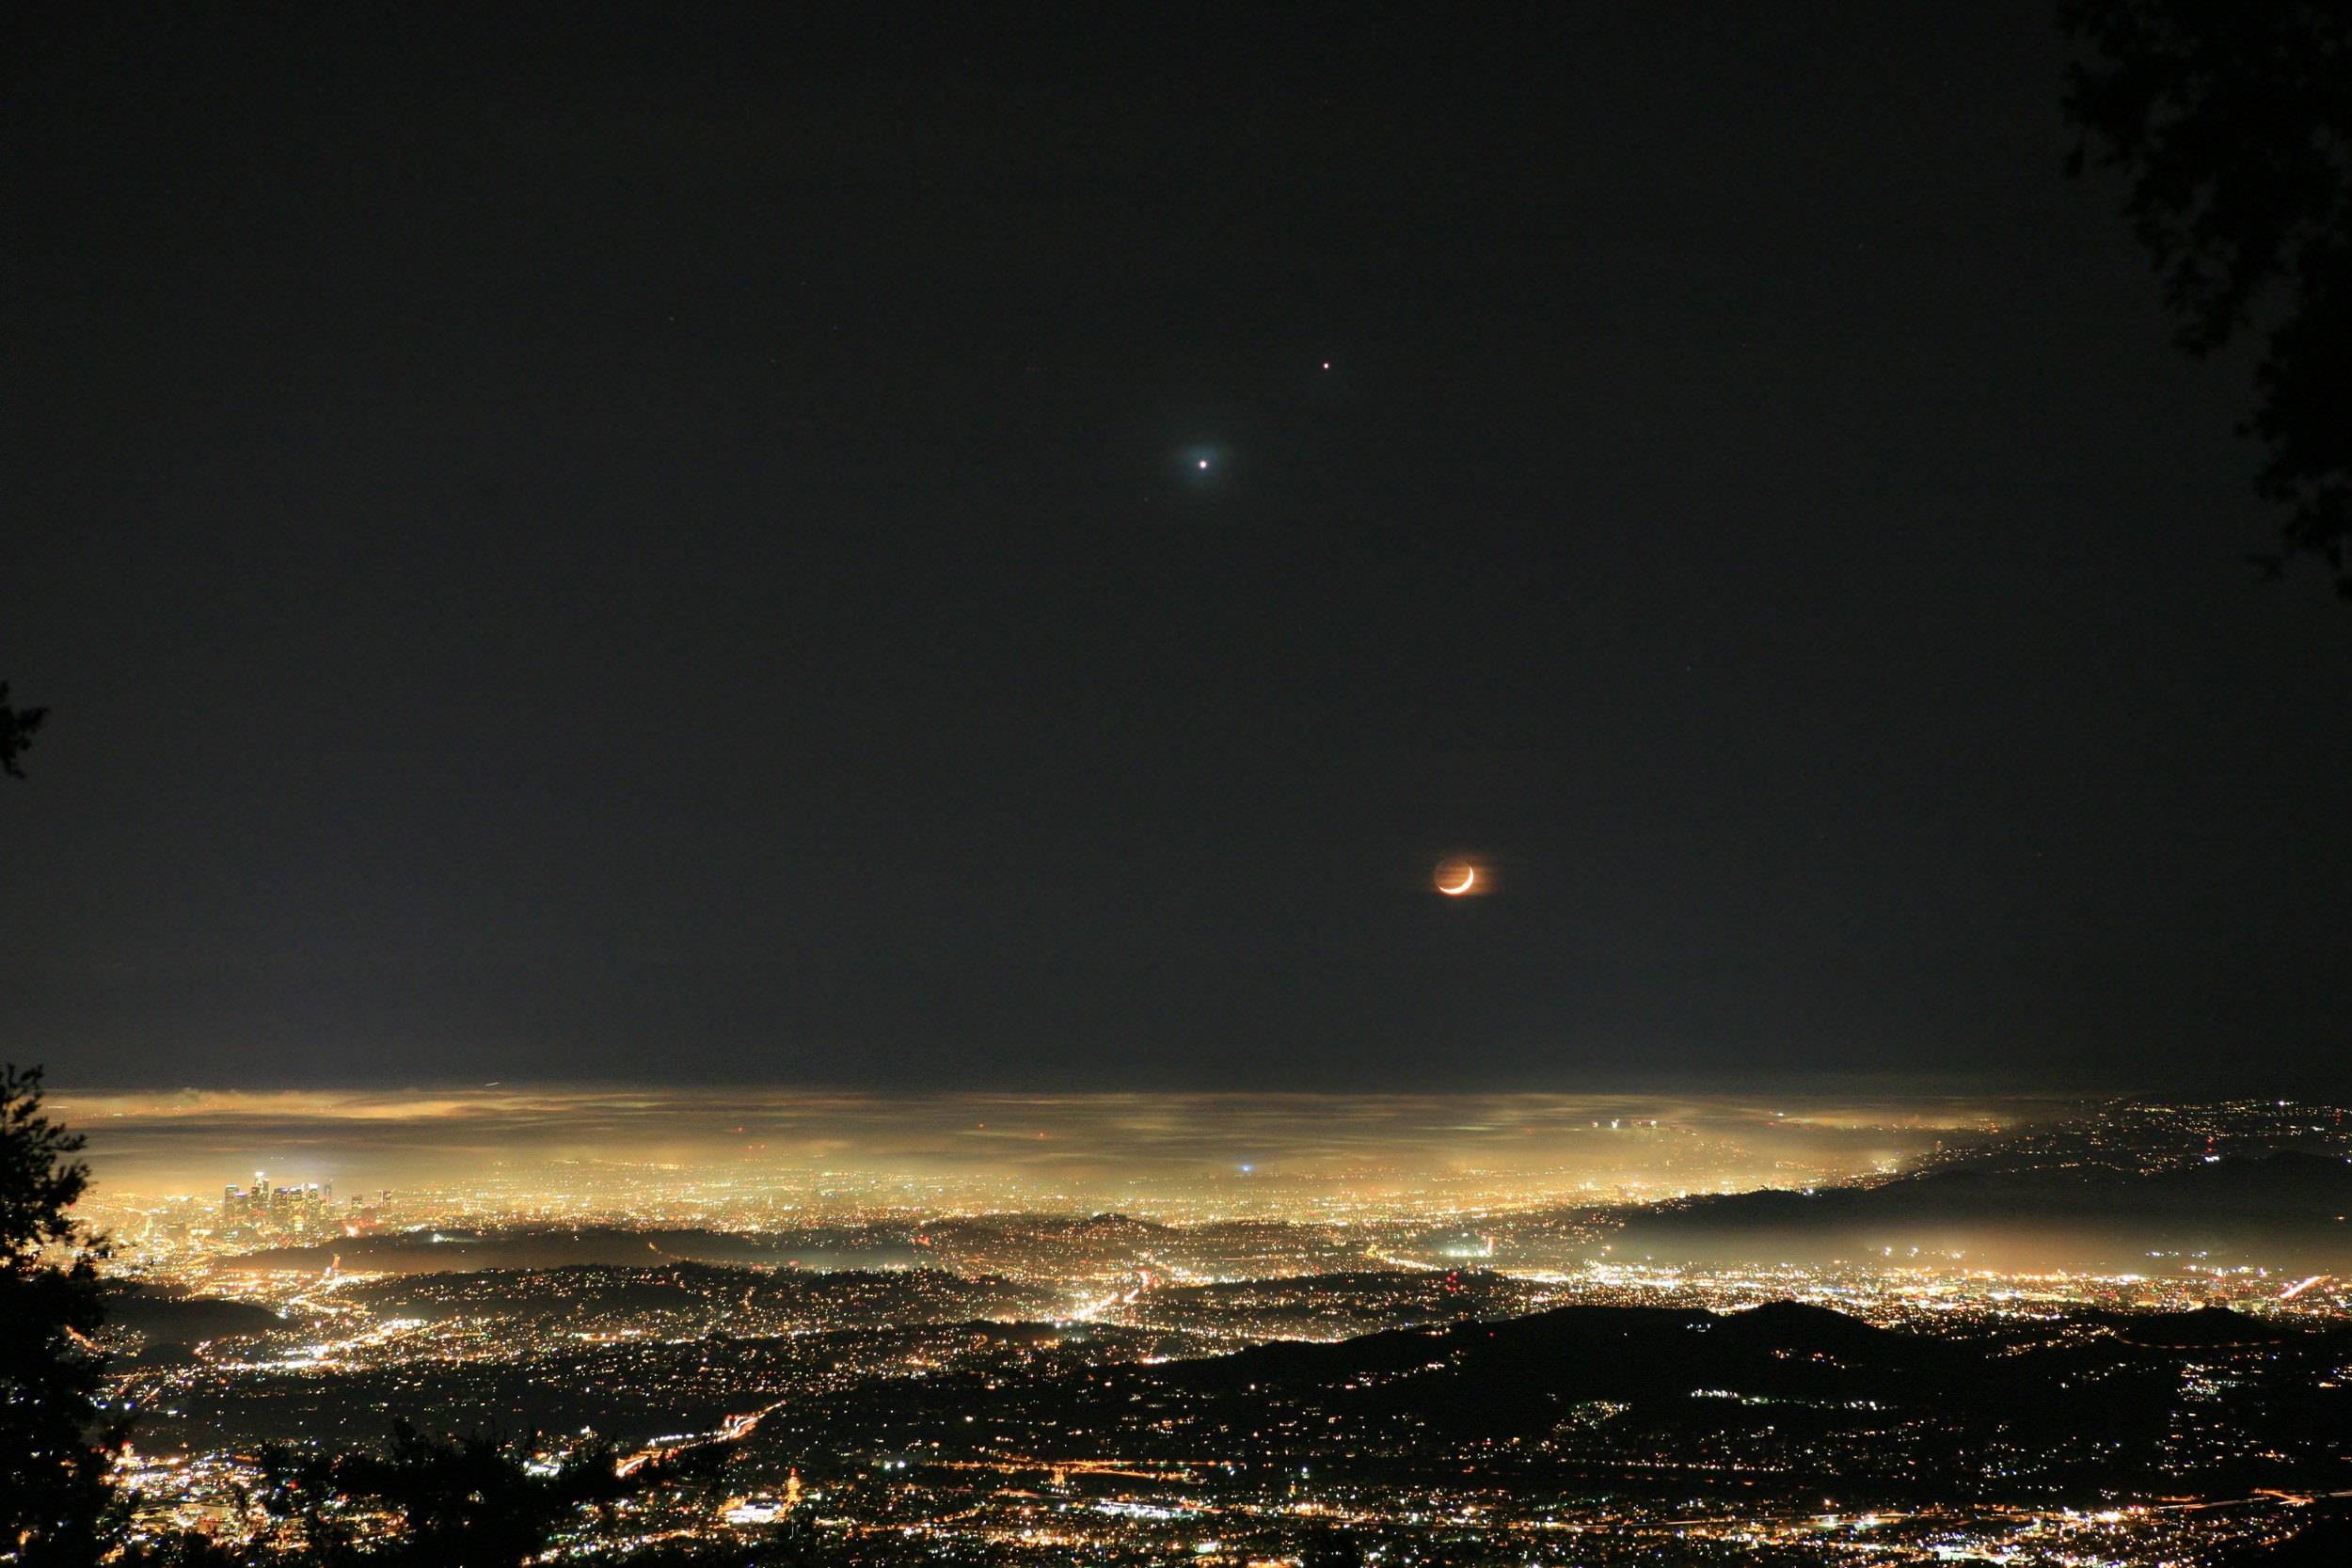 General 2500x1667 night lights cityscape mist Moon landscape sky Venus Jupiter crescent moon